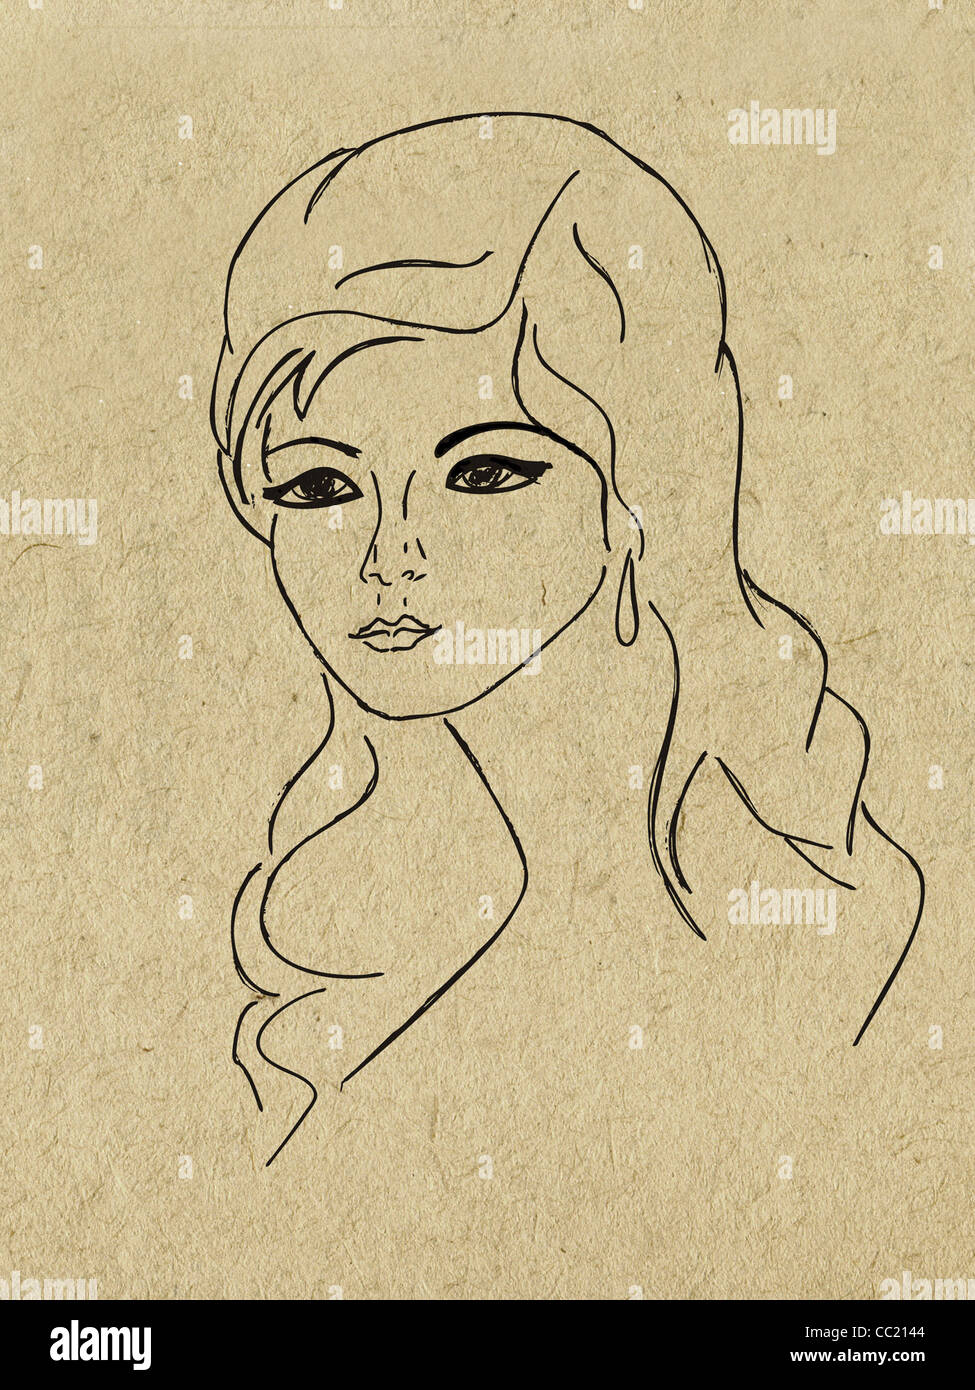 Dibujo a Lápiz sobre cartón Fotografía de stock - Alamy